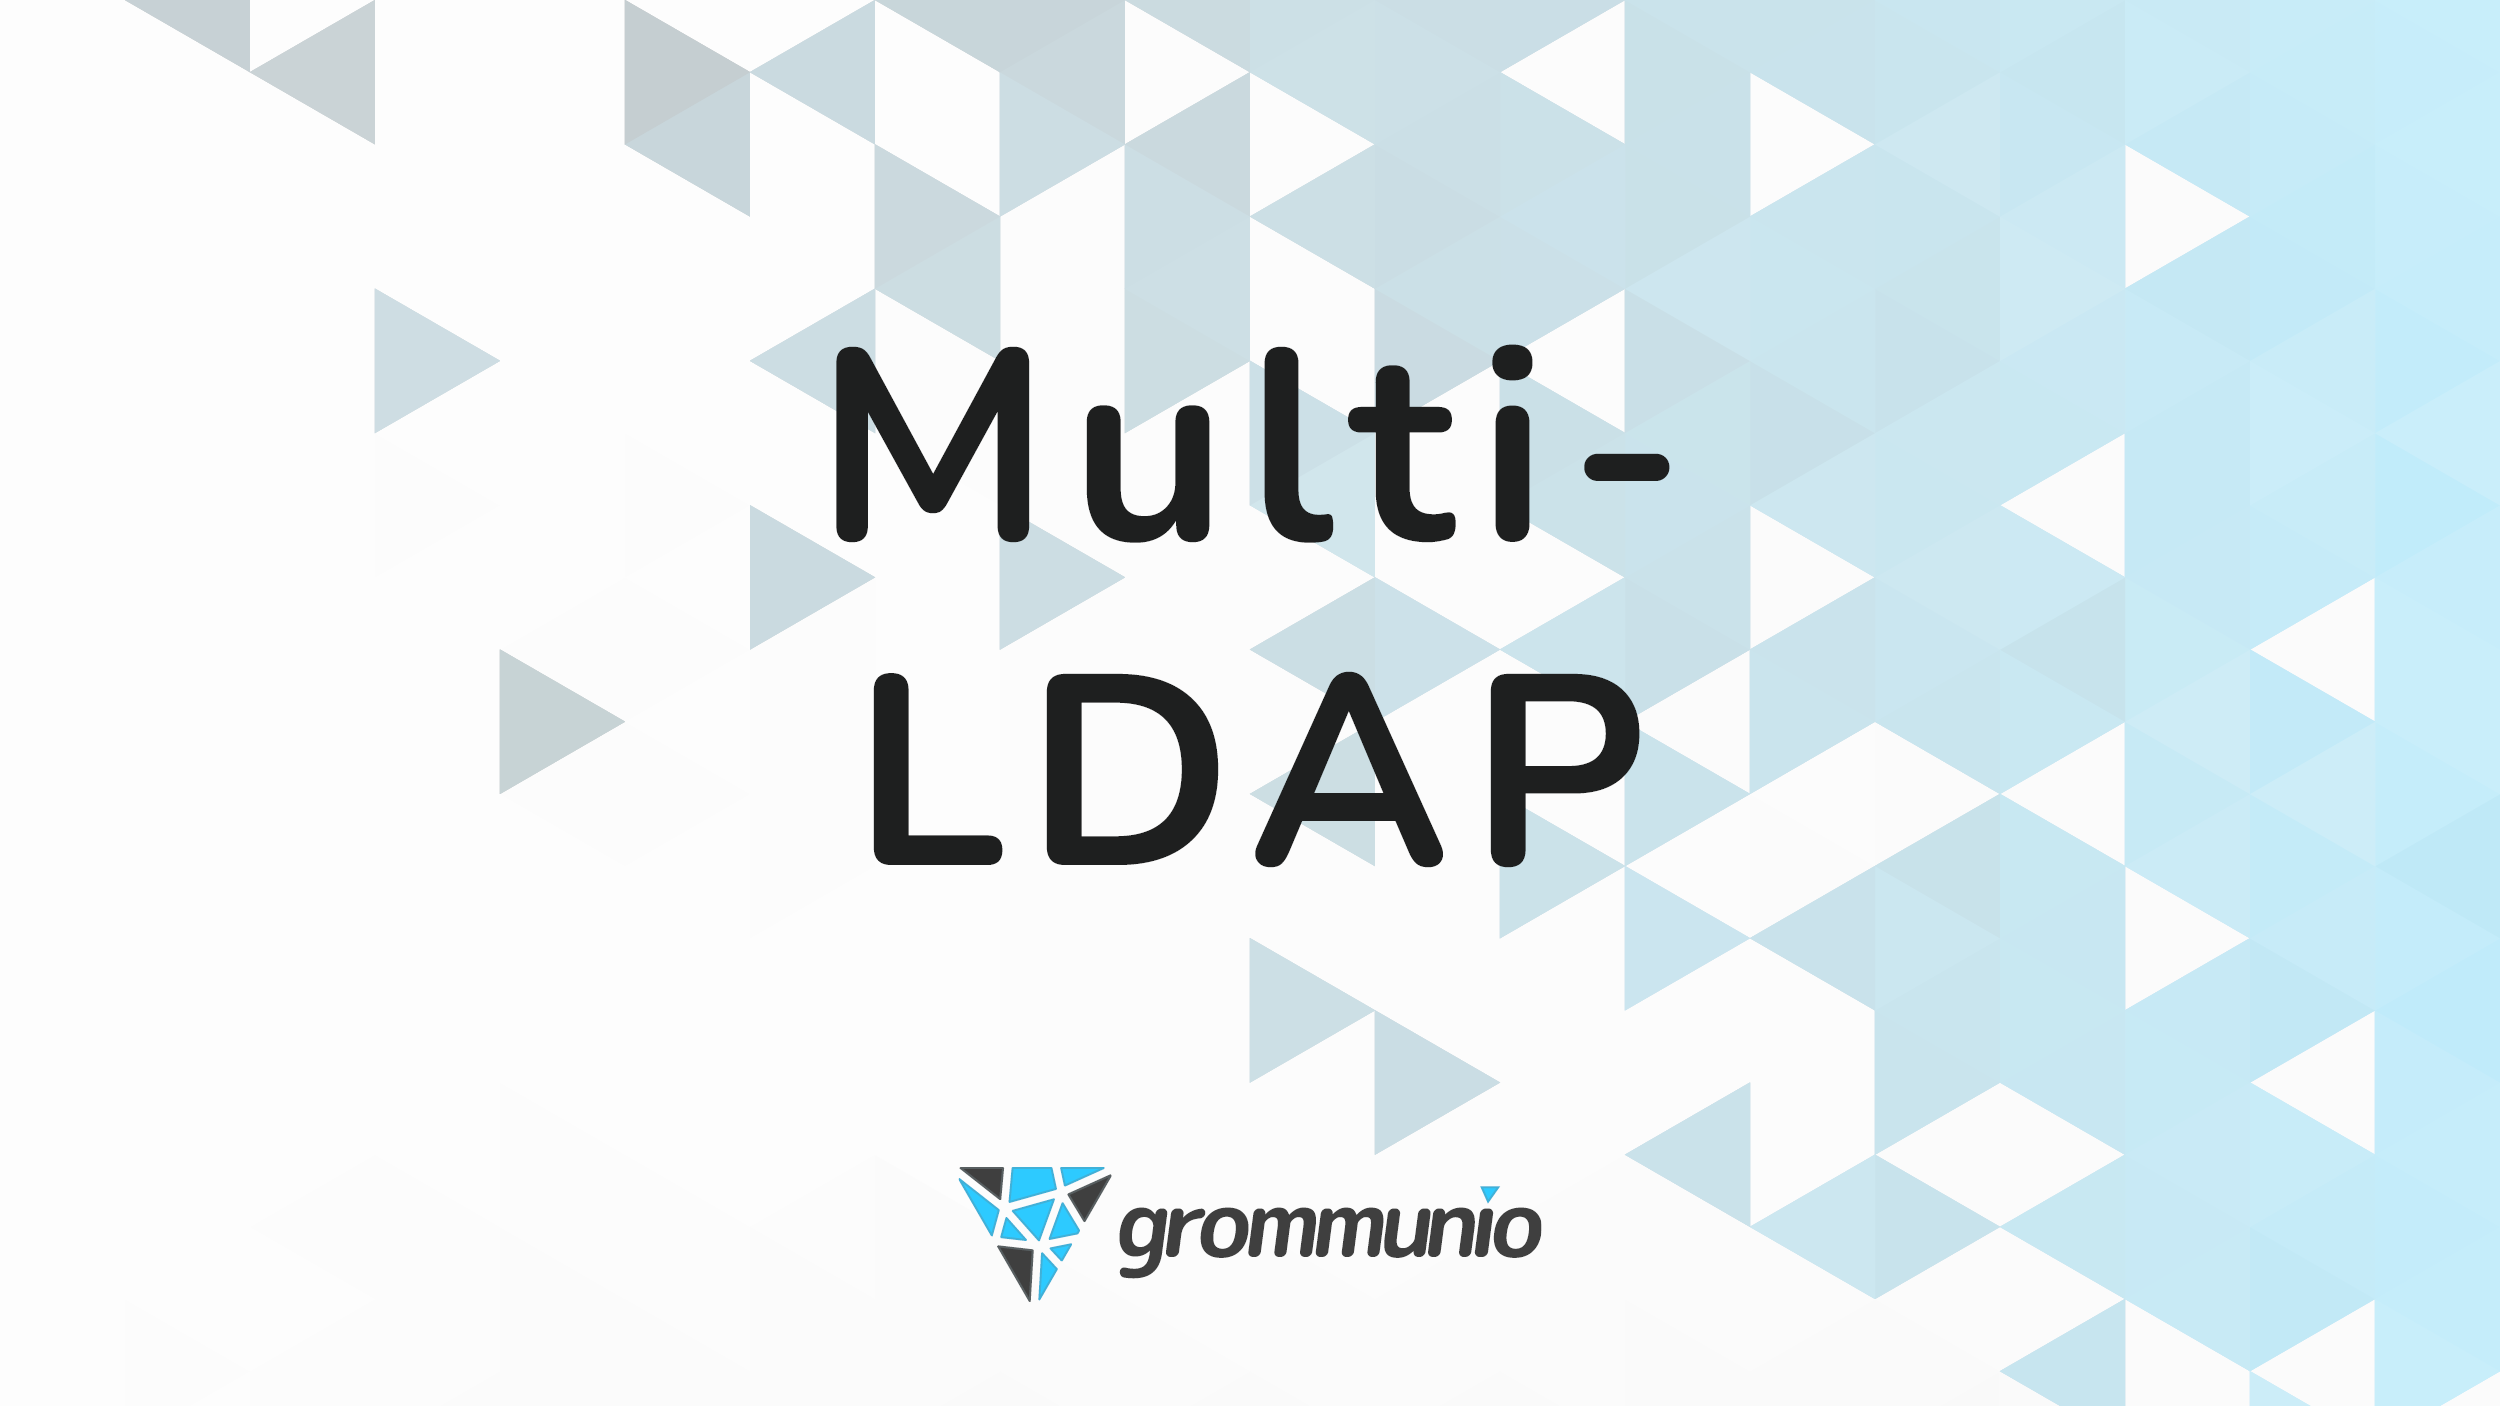 Multitenancy: grommunio is the world’s first Multi-LDAP groupware